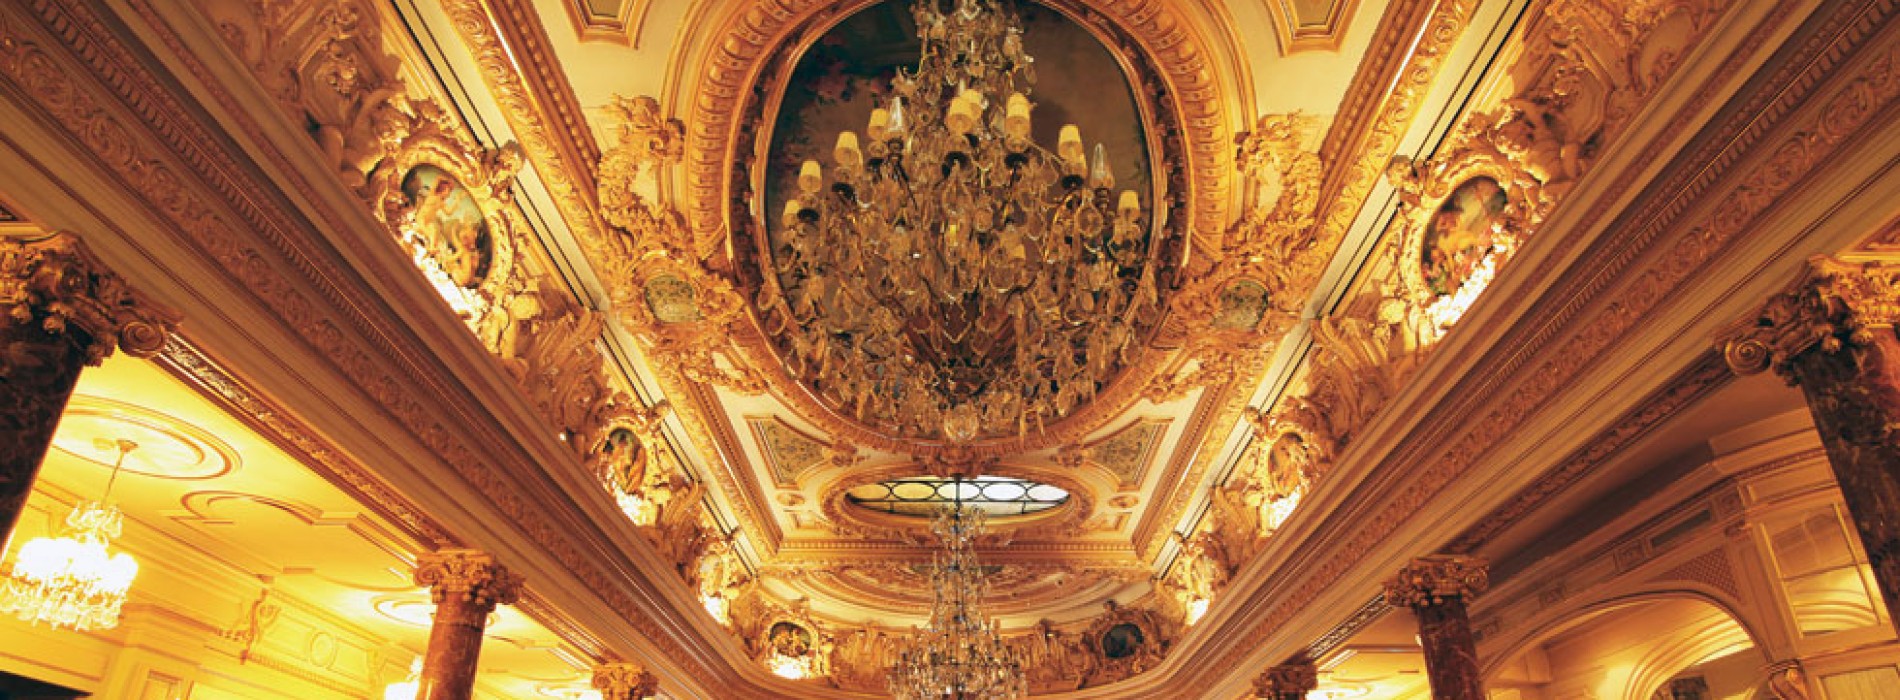 Explore Monaco’s majestic beauty and Opulence